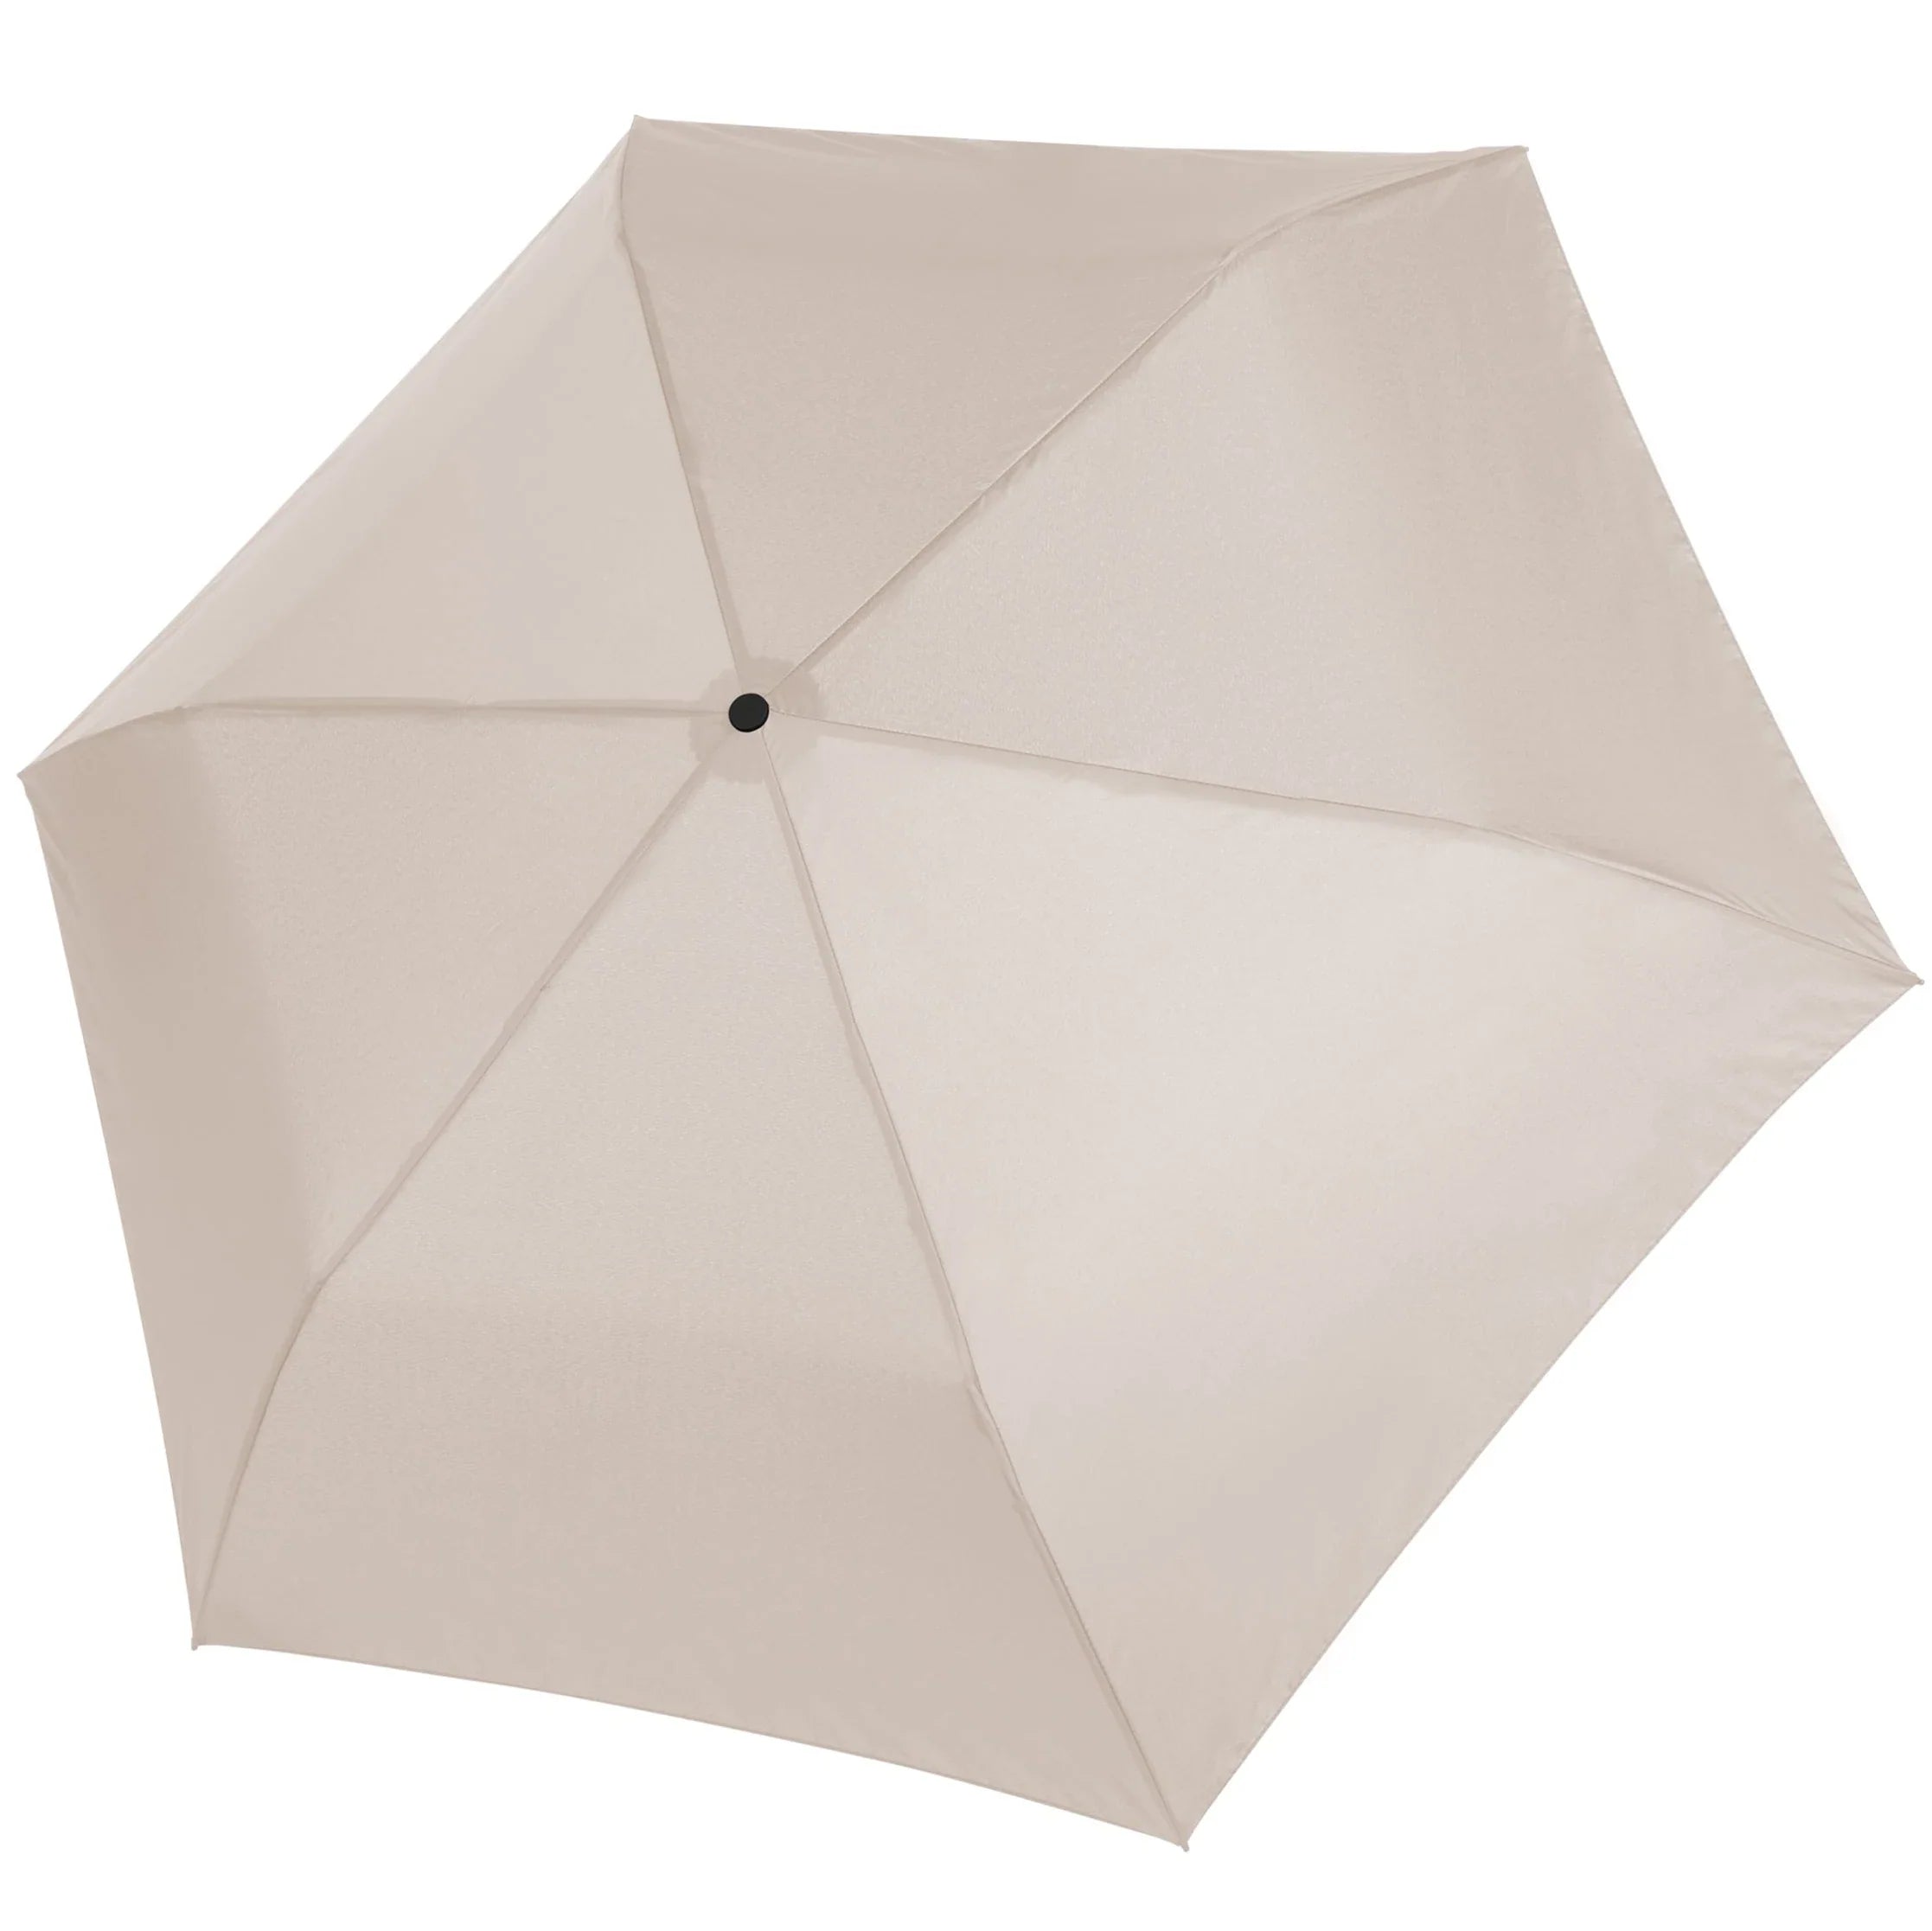 - cm 21 Zero99 Doppler black pocket umbrella pocket umbrellas